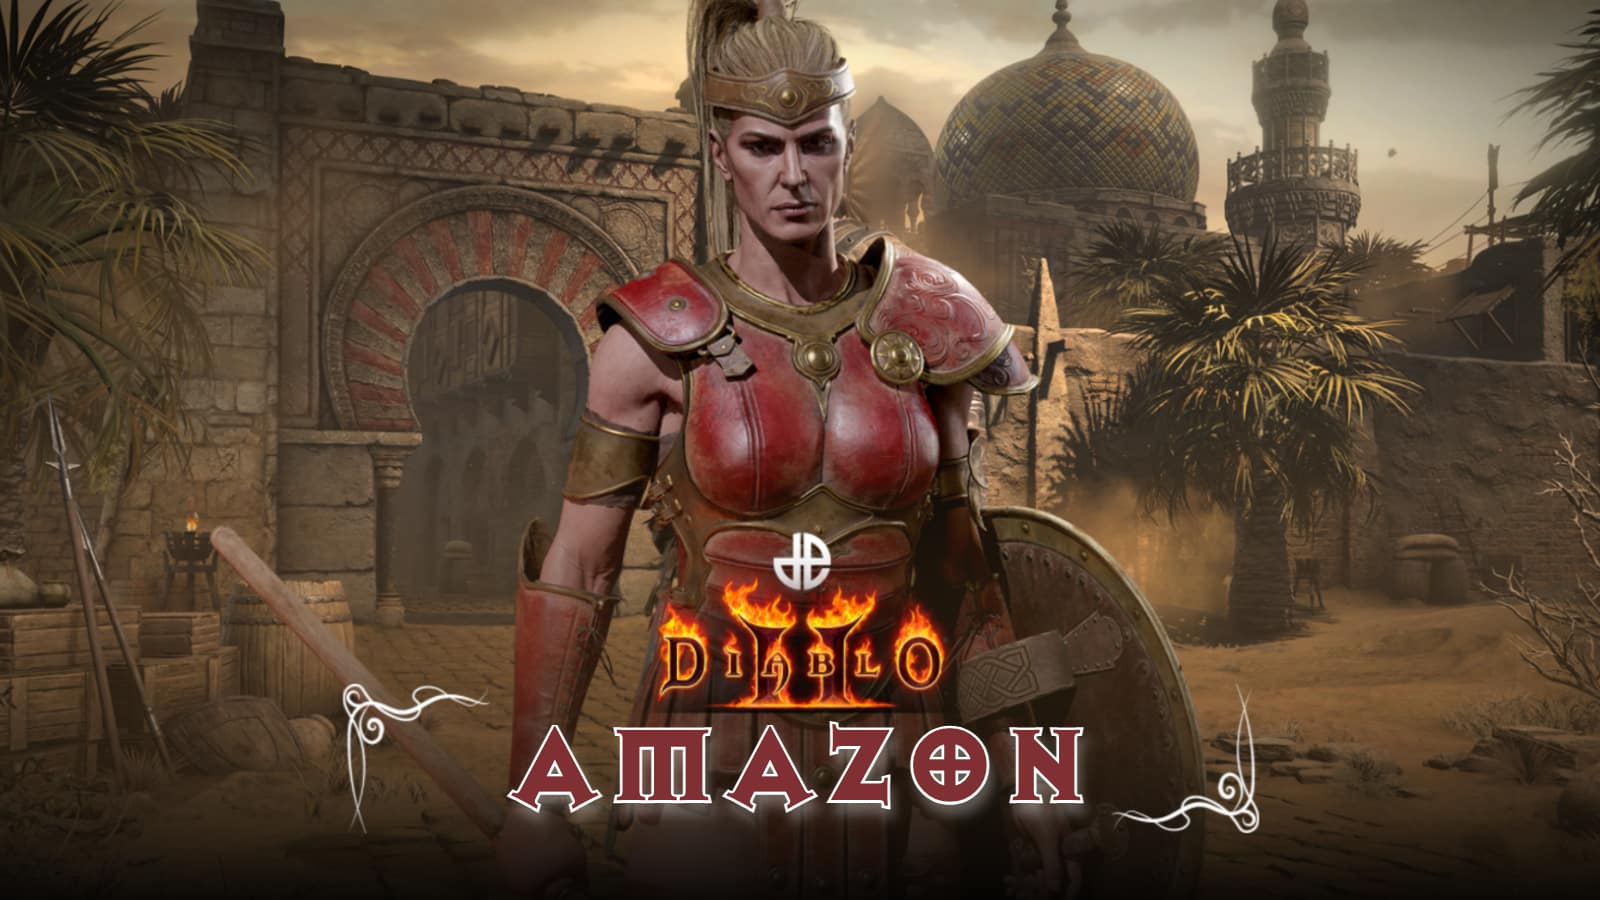 Diablo 2 Amazon builds resurrected